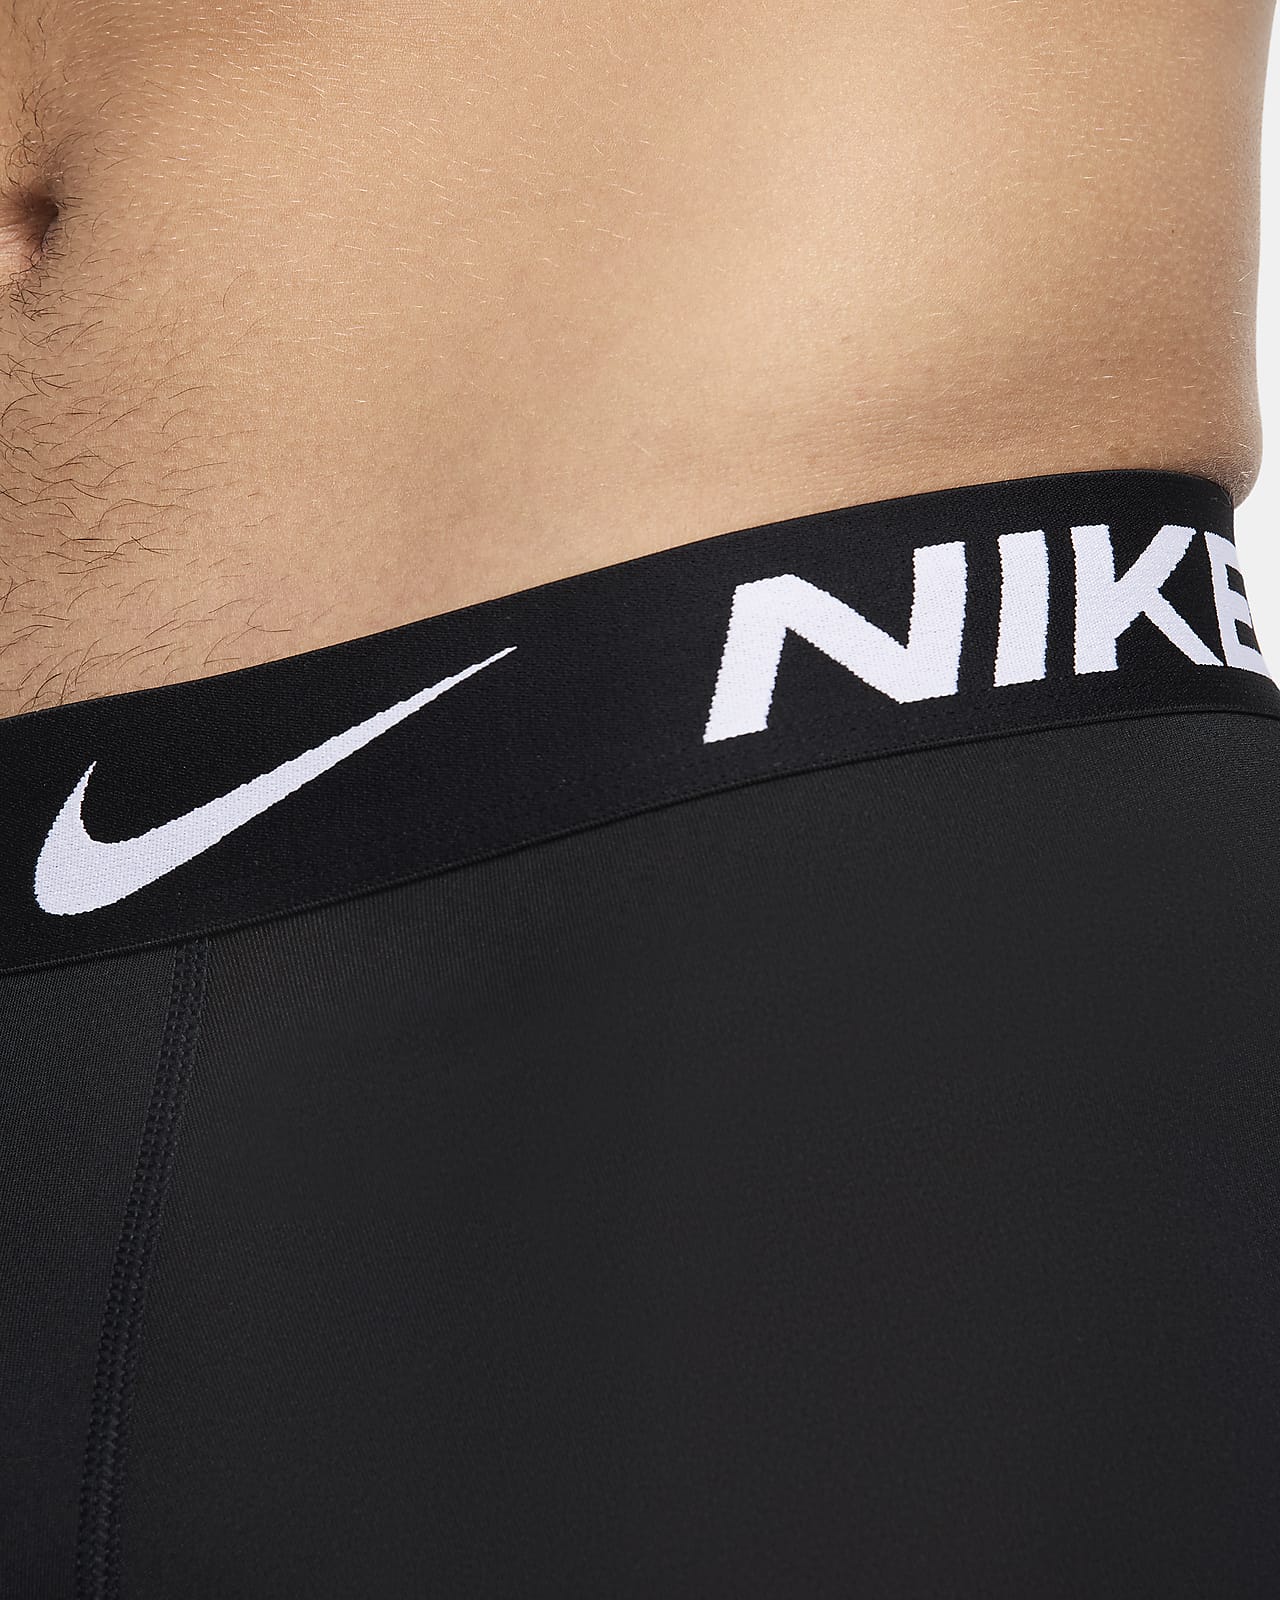 Nike Micro Fiber Trunk Briefs Underwear Mens XL Dri Fit Black Athletic - 3  Pack